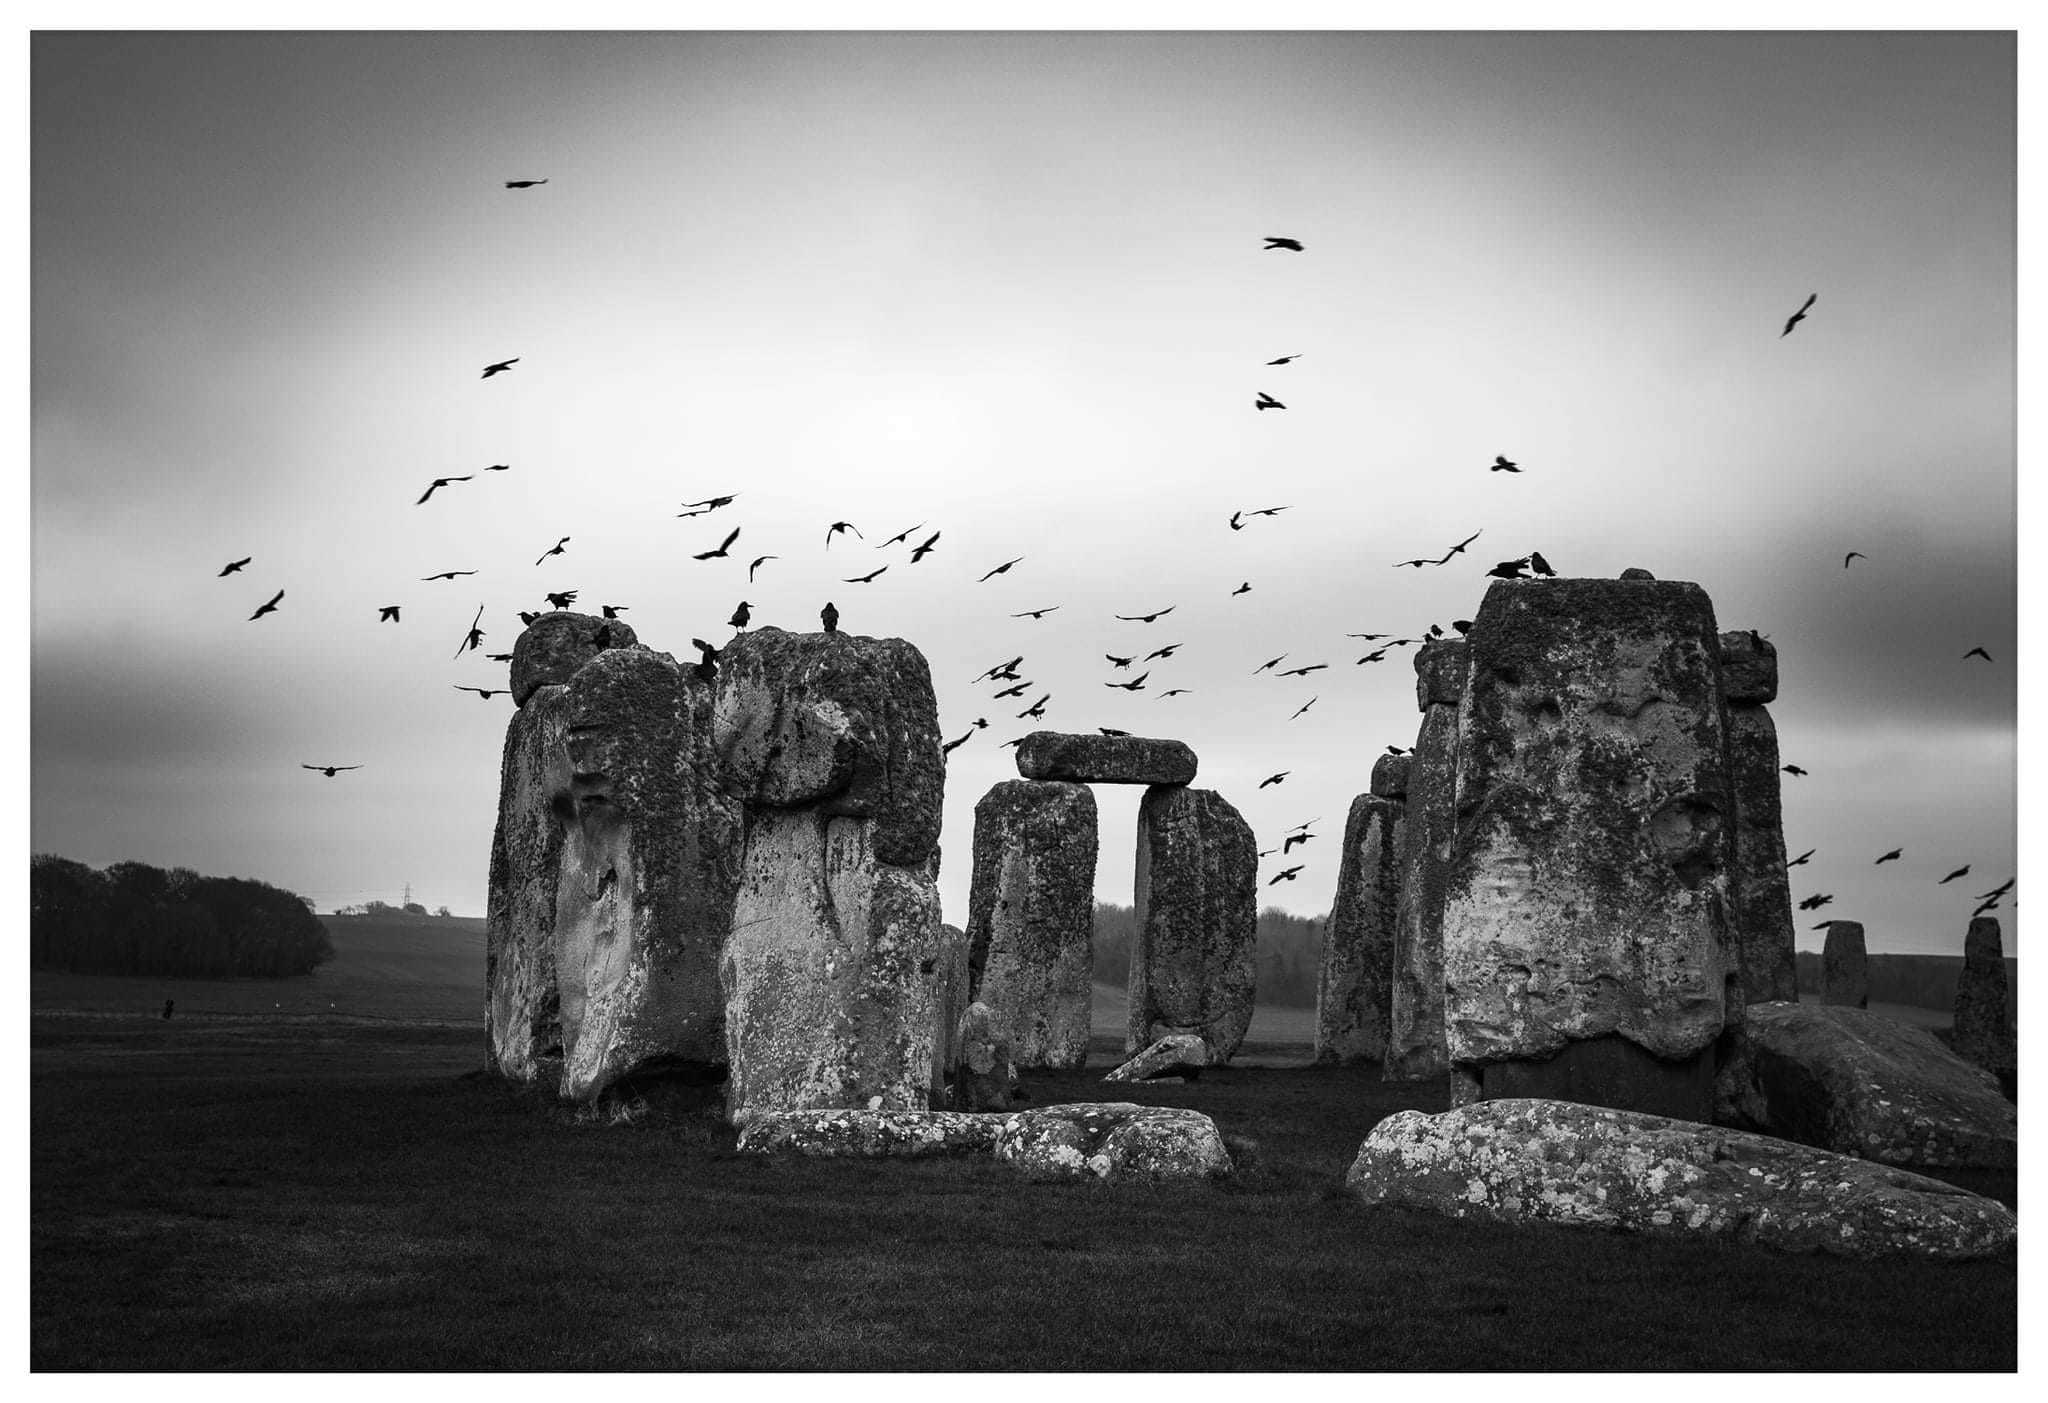 Second place: Different Stonehenge visitors By Stuart Sneddon